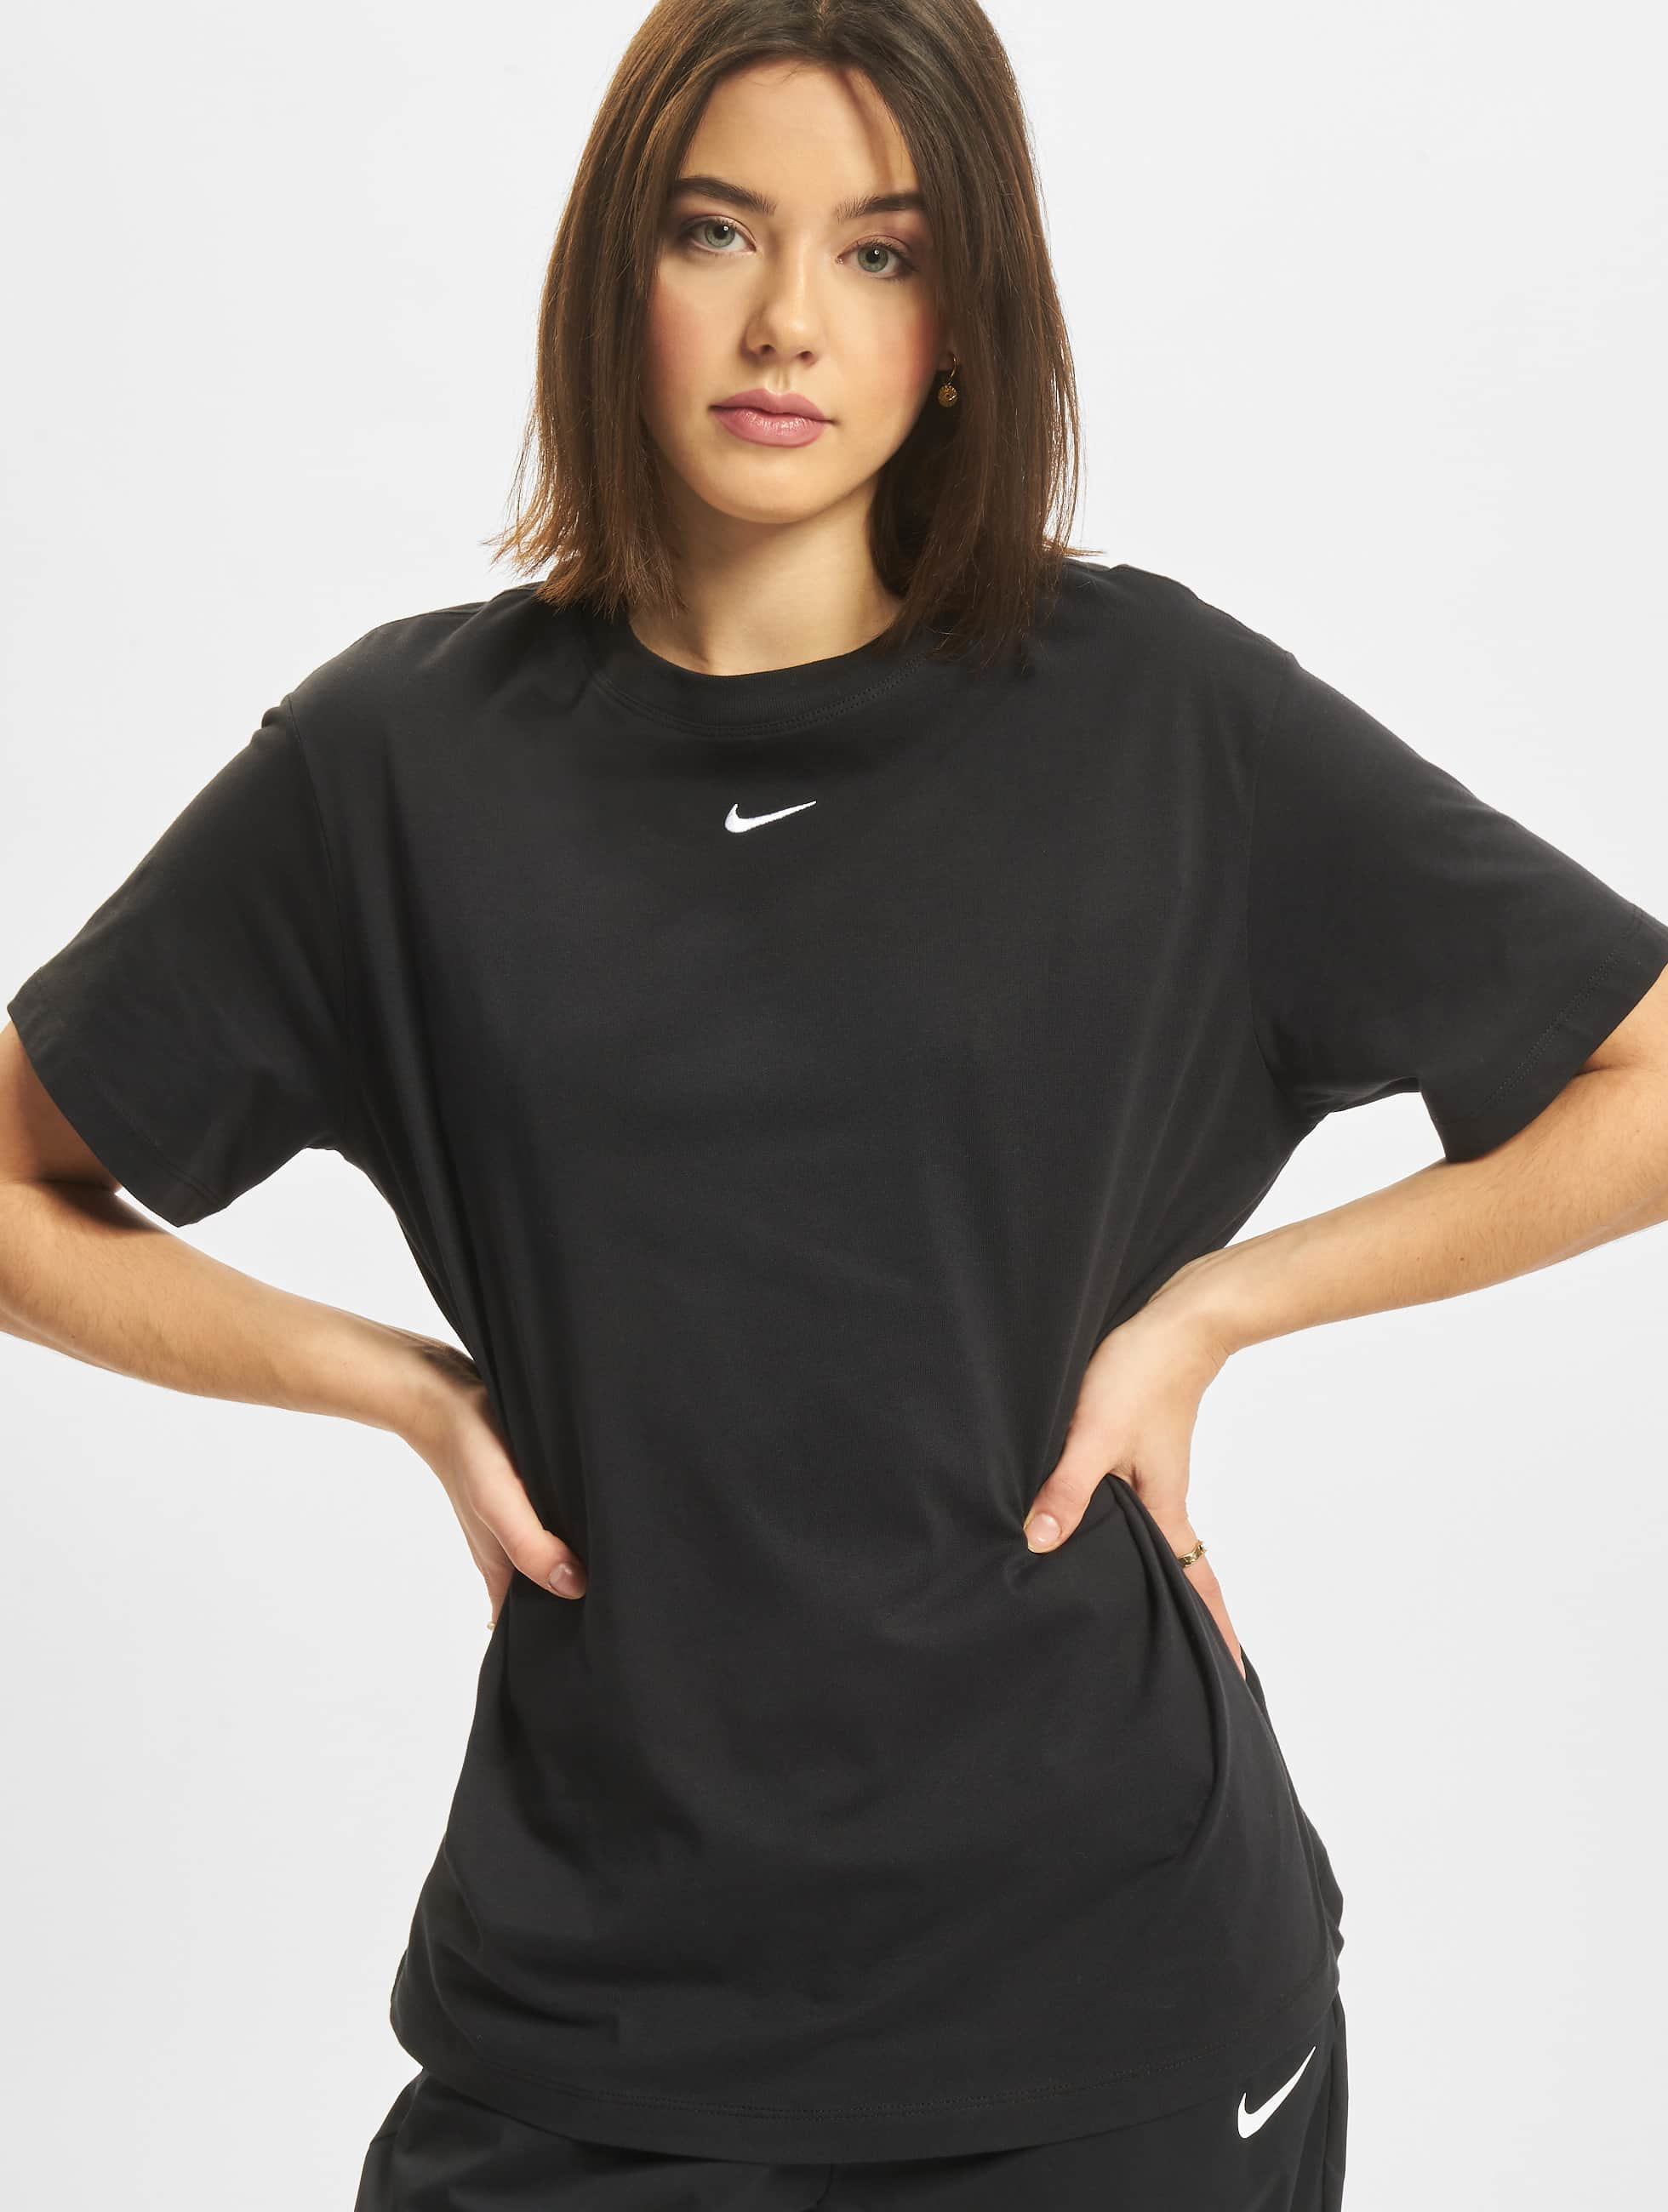 Vegen Tablet Uitsluiting Nike bovenstuk / t-shirt Essential Bf Lbr in zwart 875902